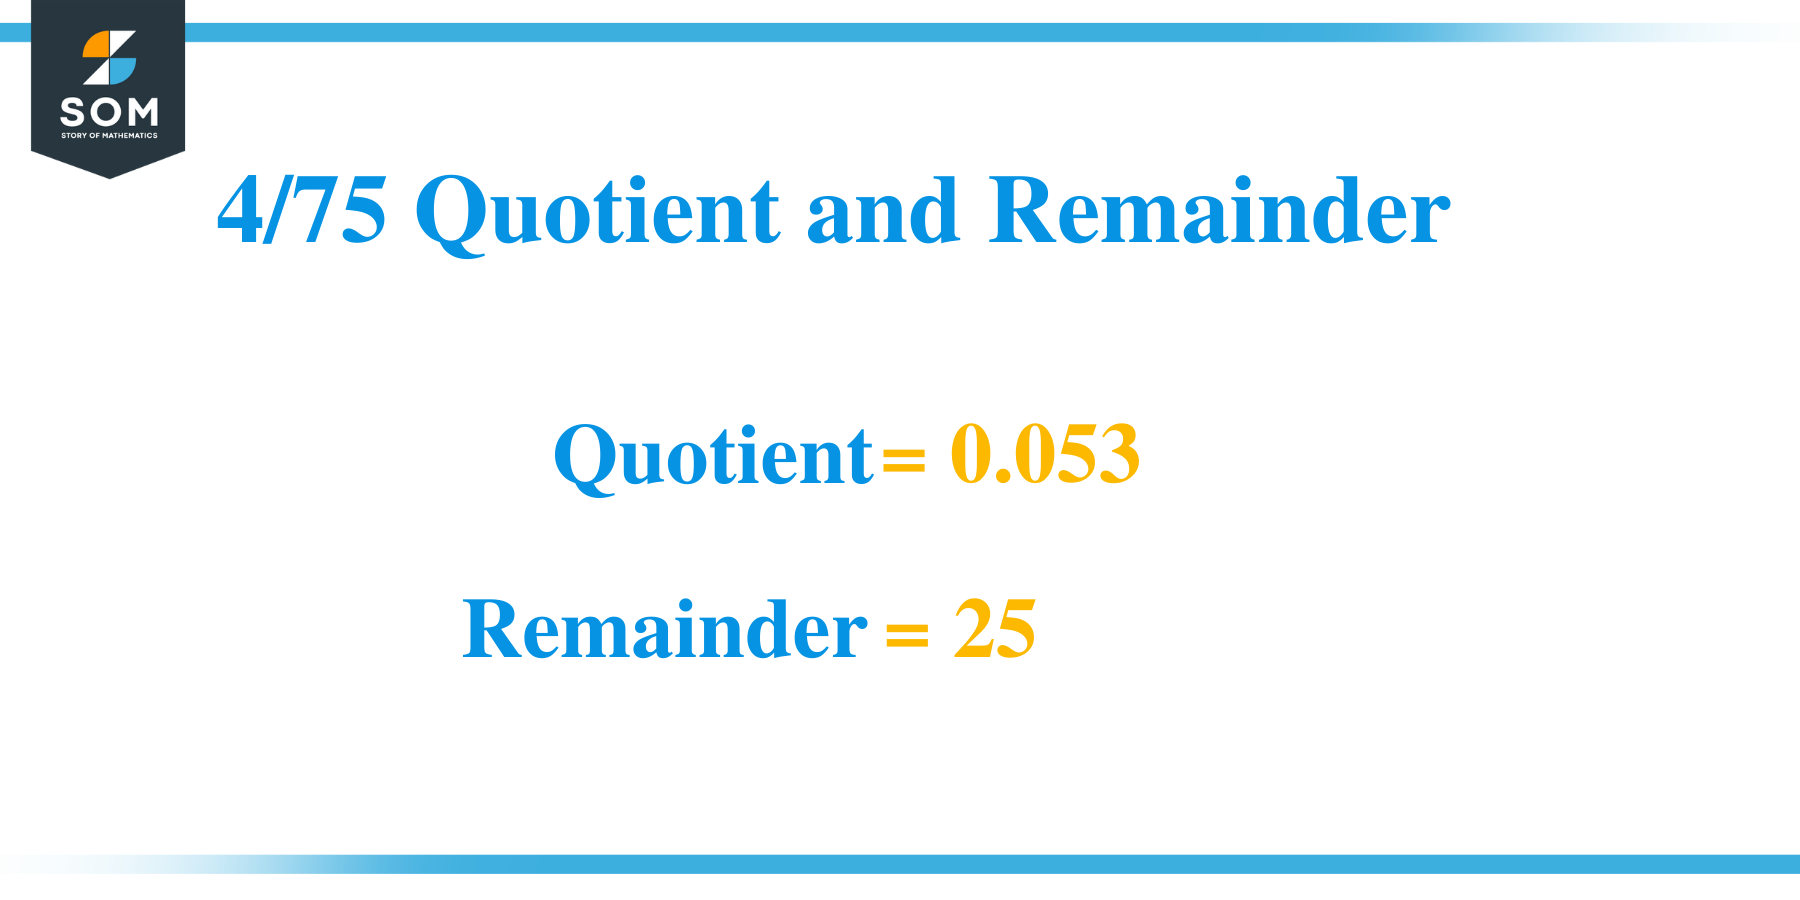 4_75 Quotient and Remainder